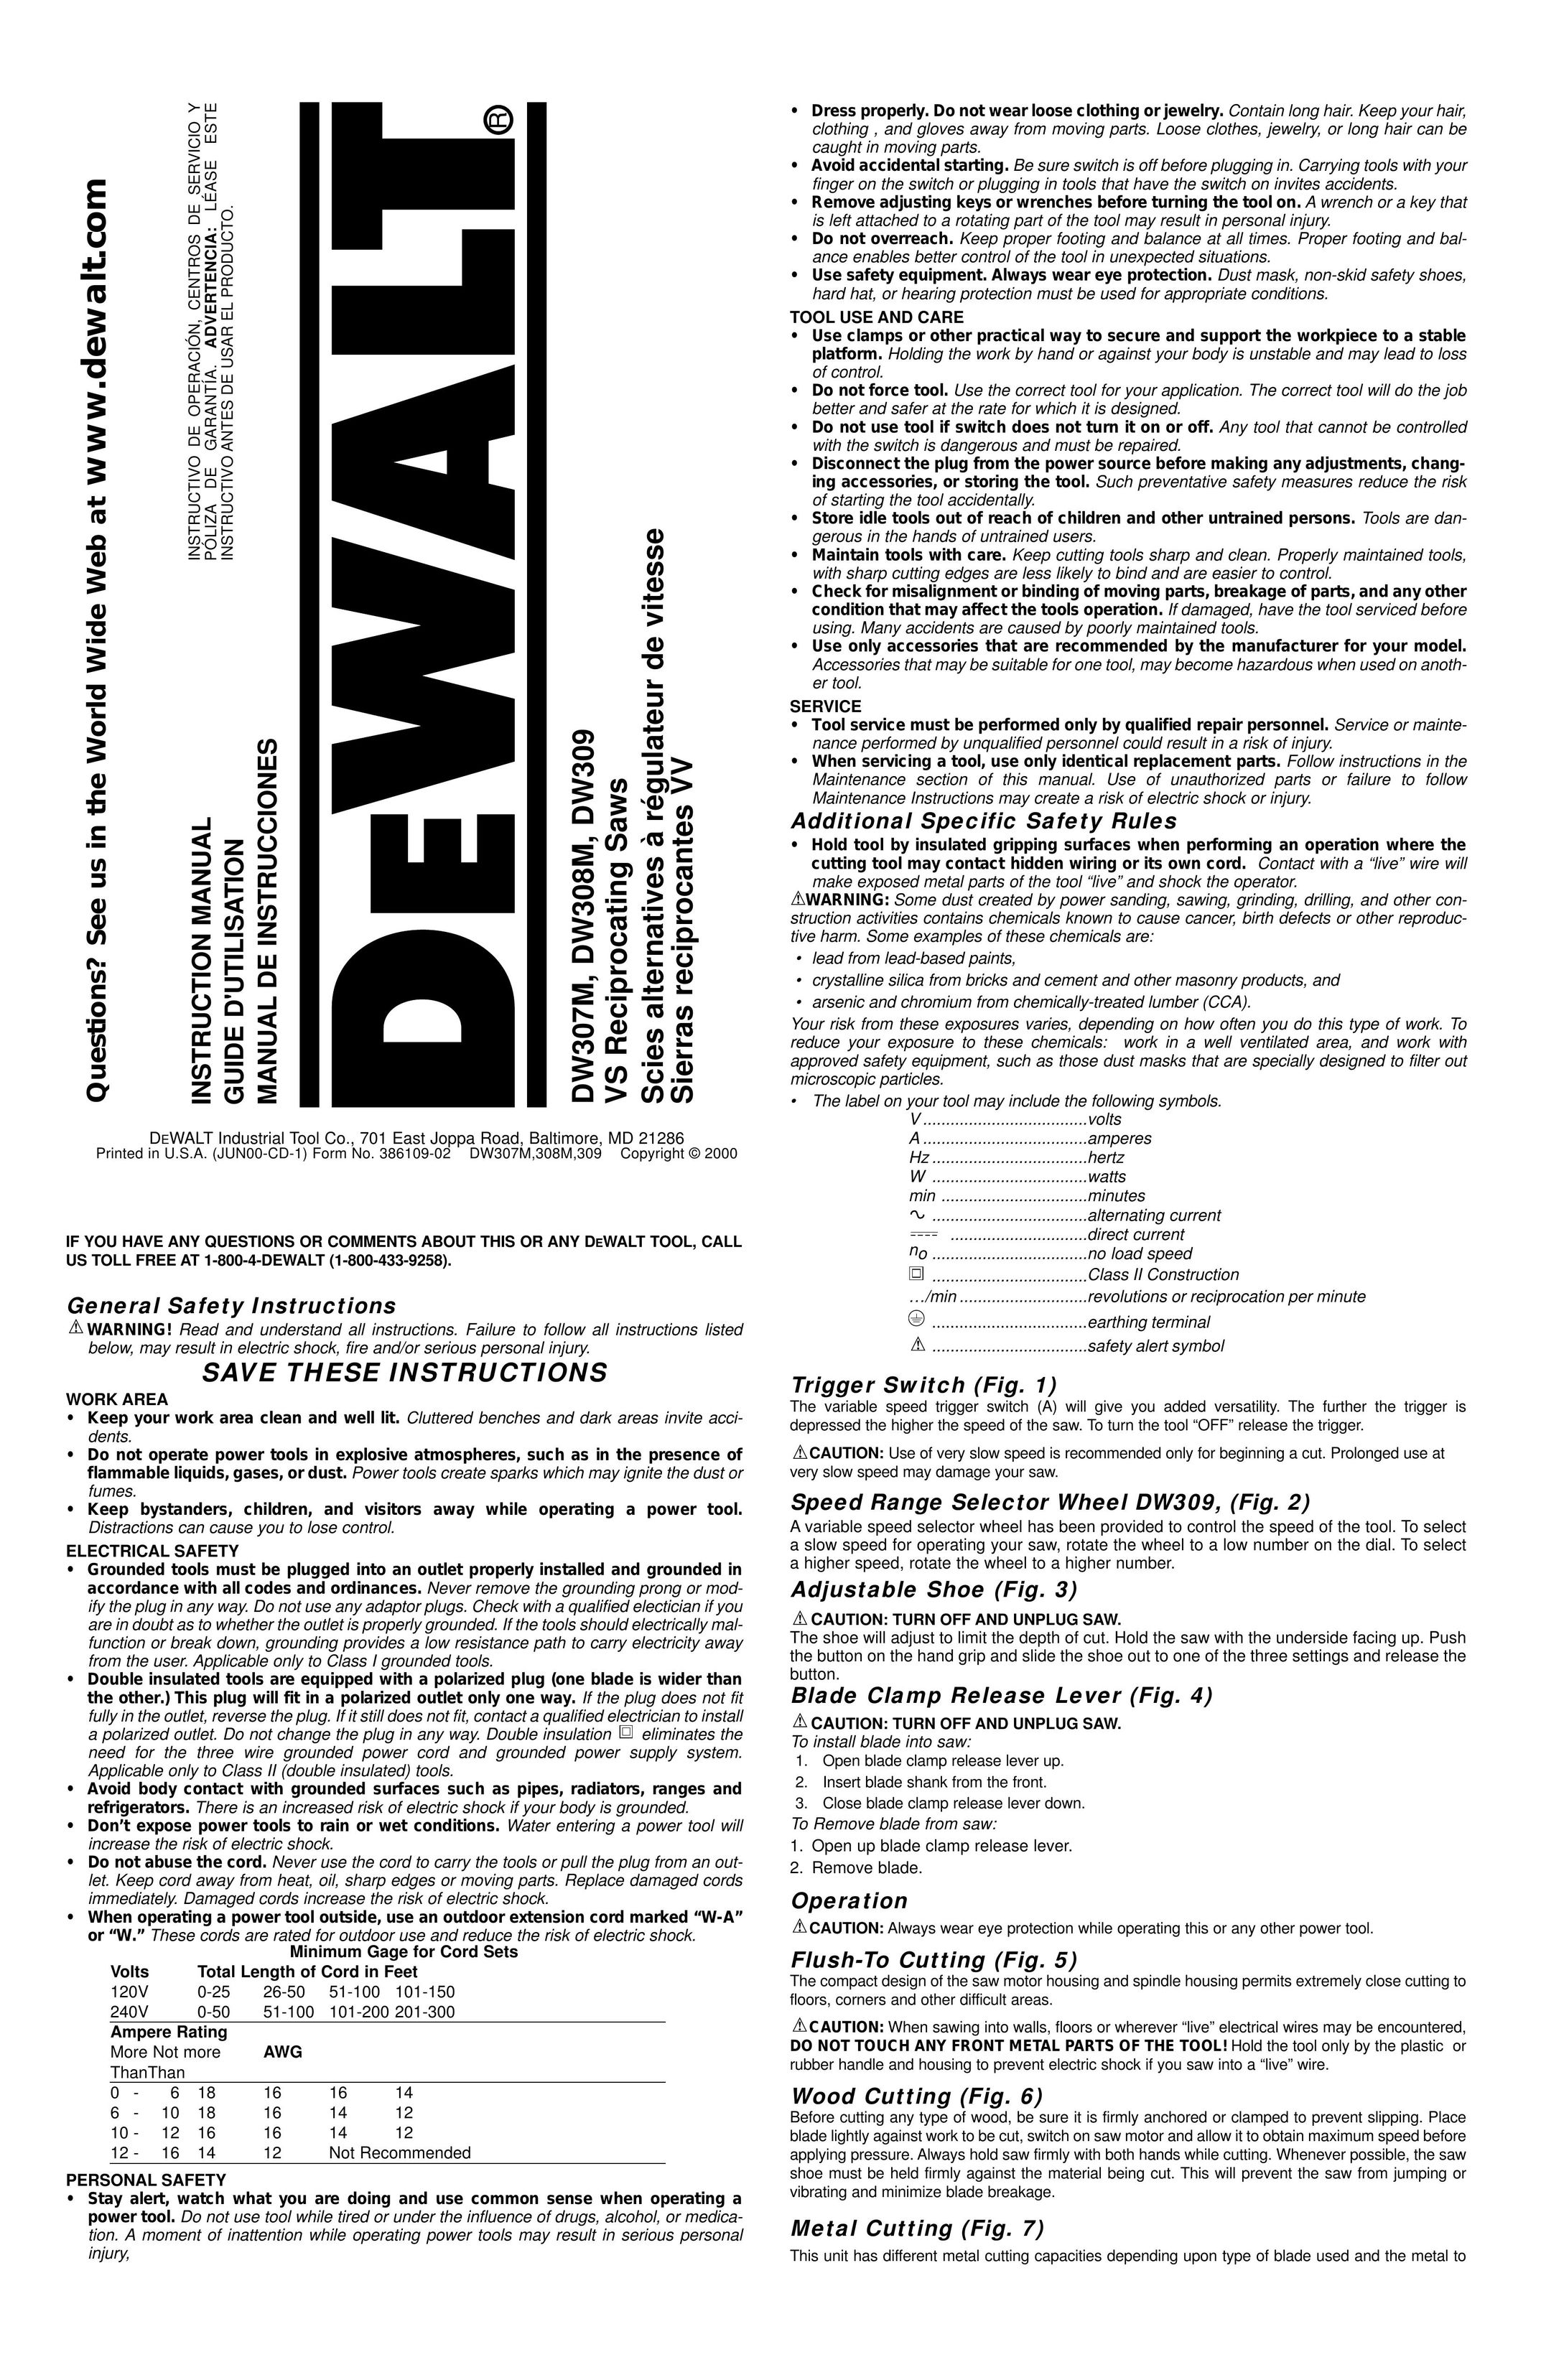 DeWalt DW307M Range User Manual